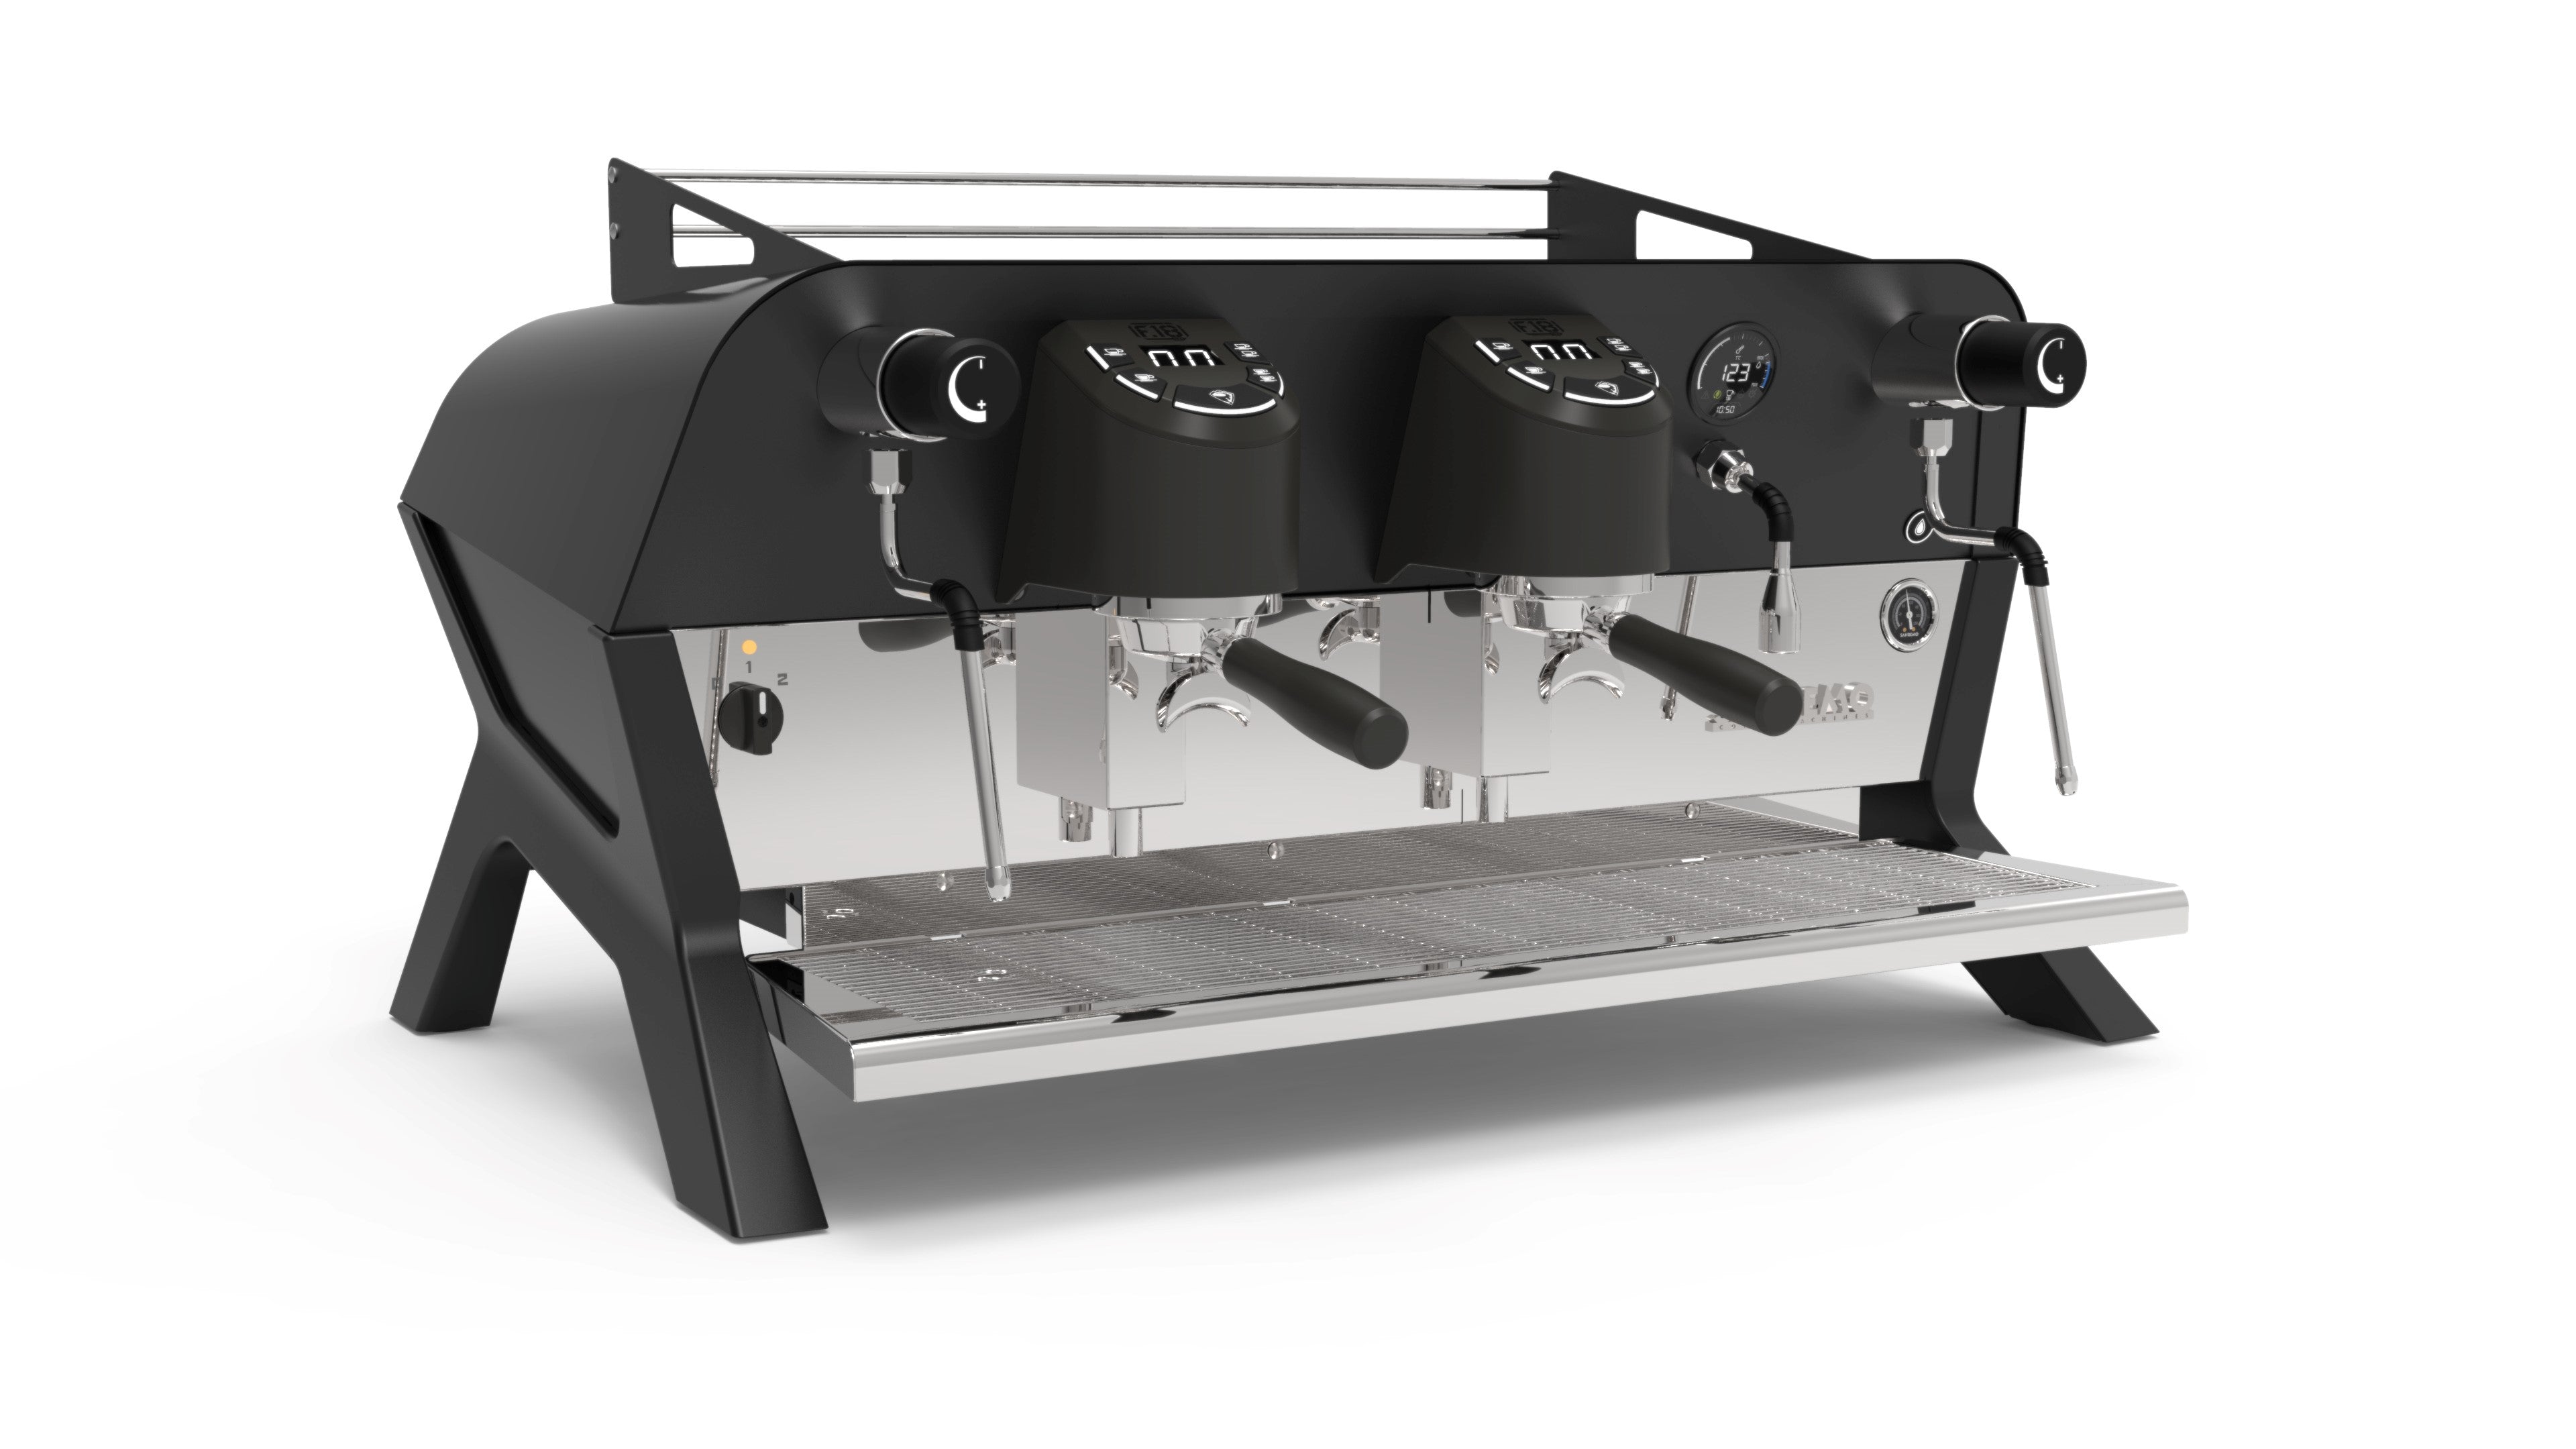 Sanremo F18 SB Coffee Machine